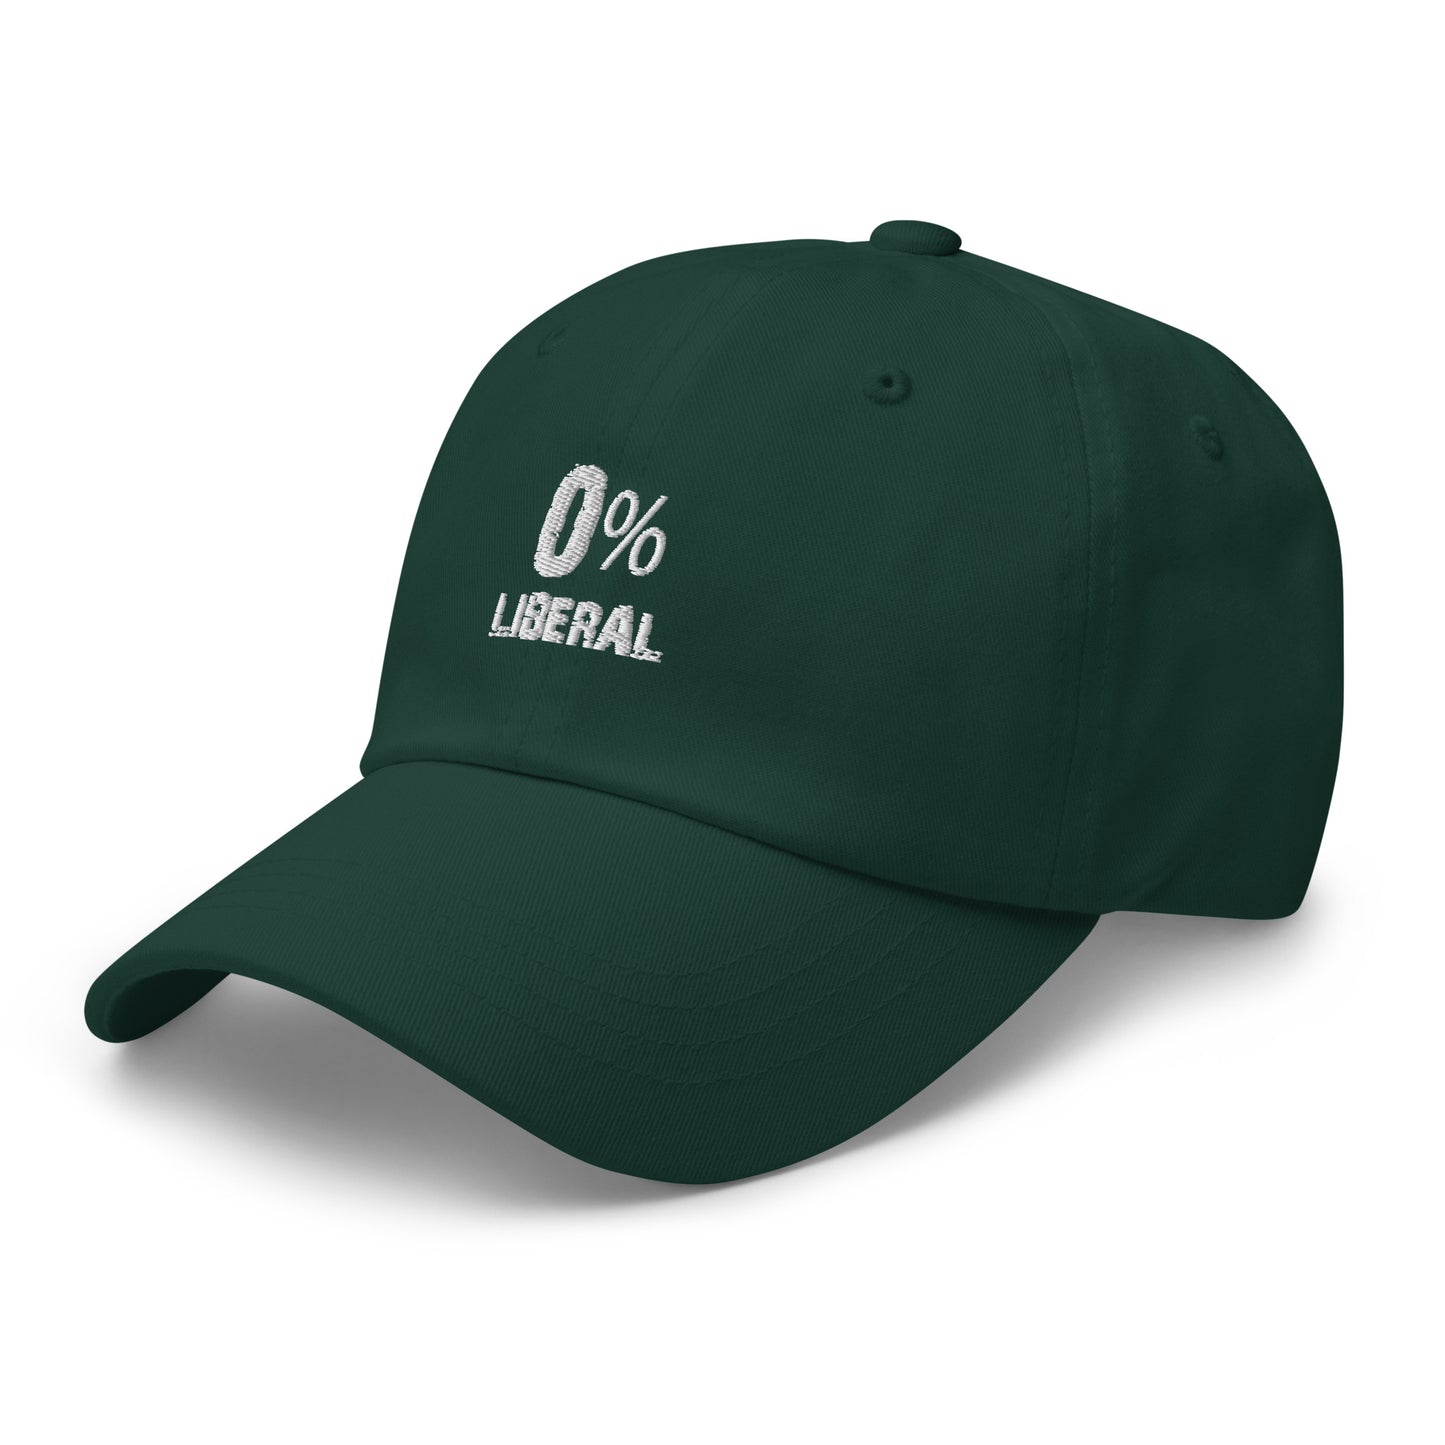 0% Liberal hat